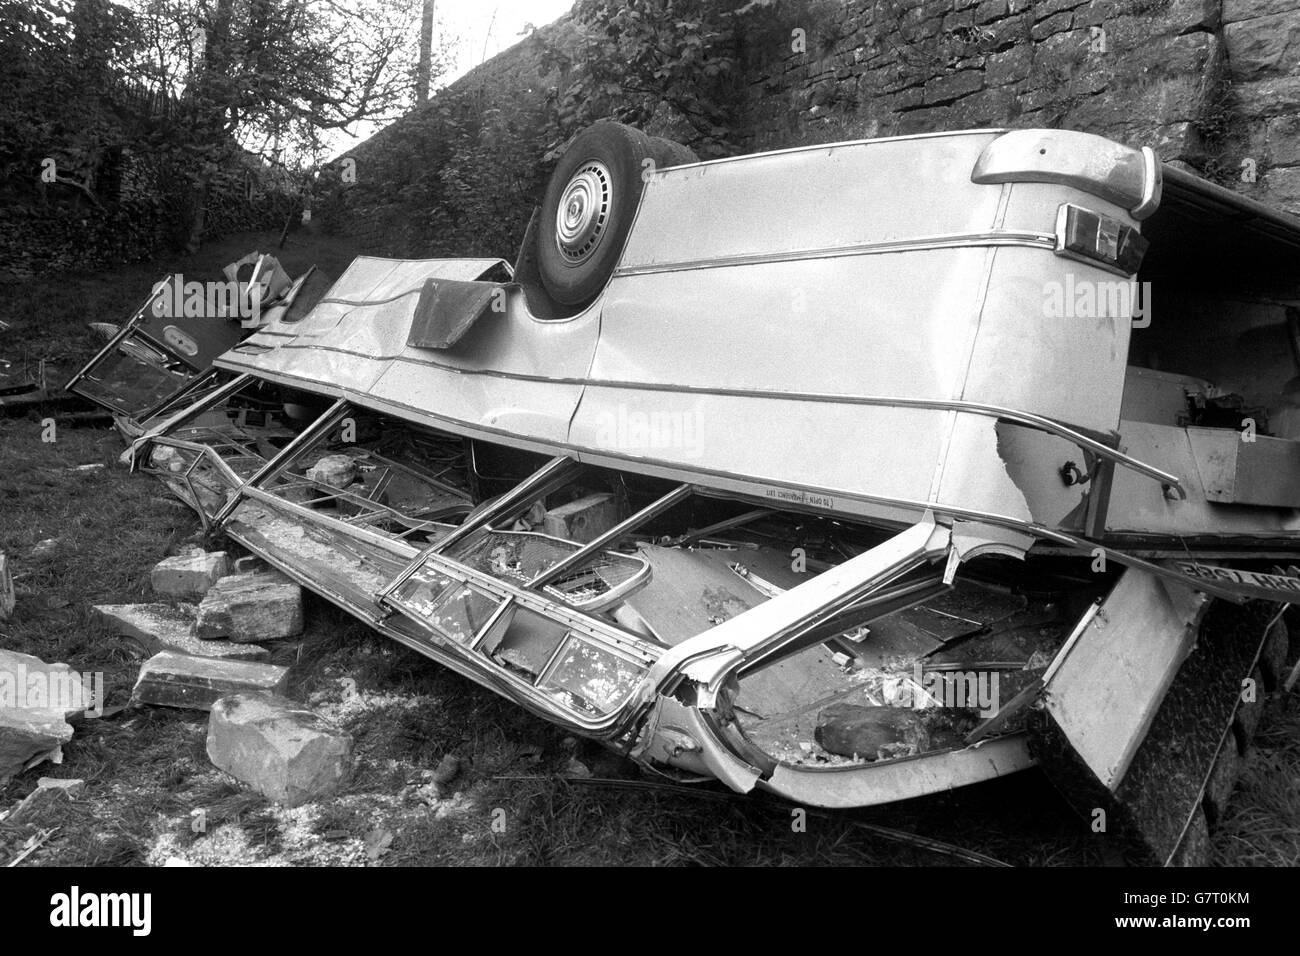 Accidents and Disasters - Coach Crash - Dibbles Bridge, Hebden Stock Photo  - Alamy